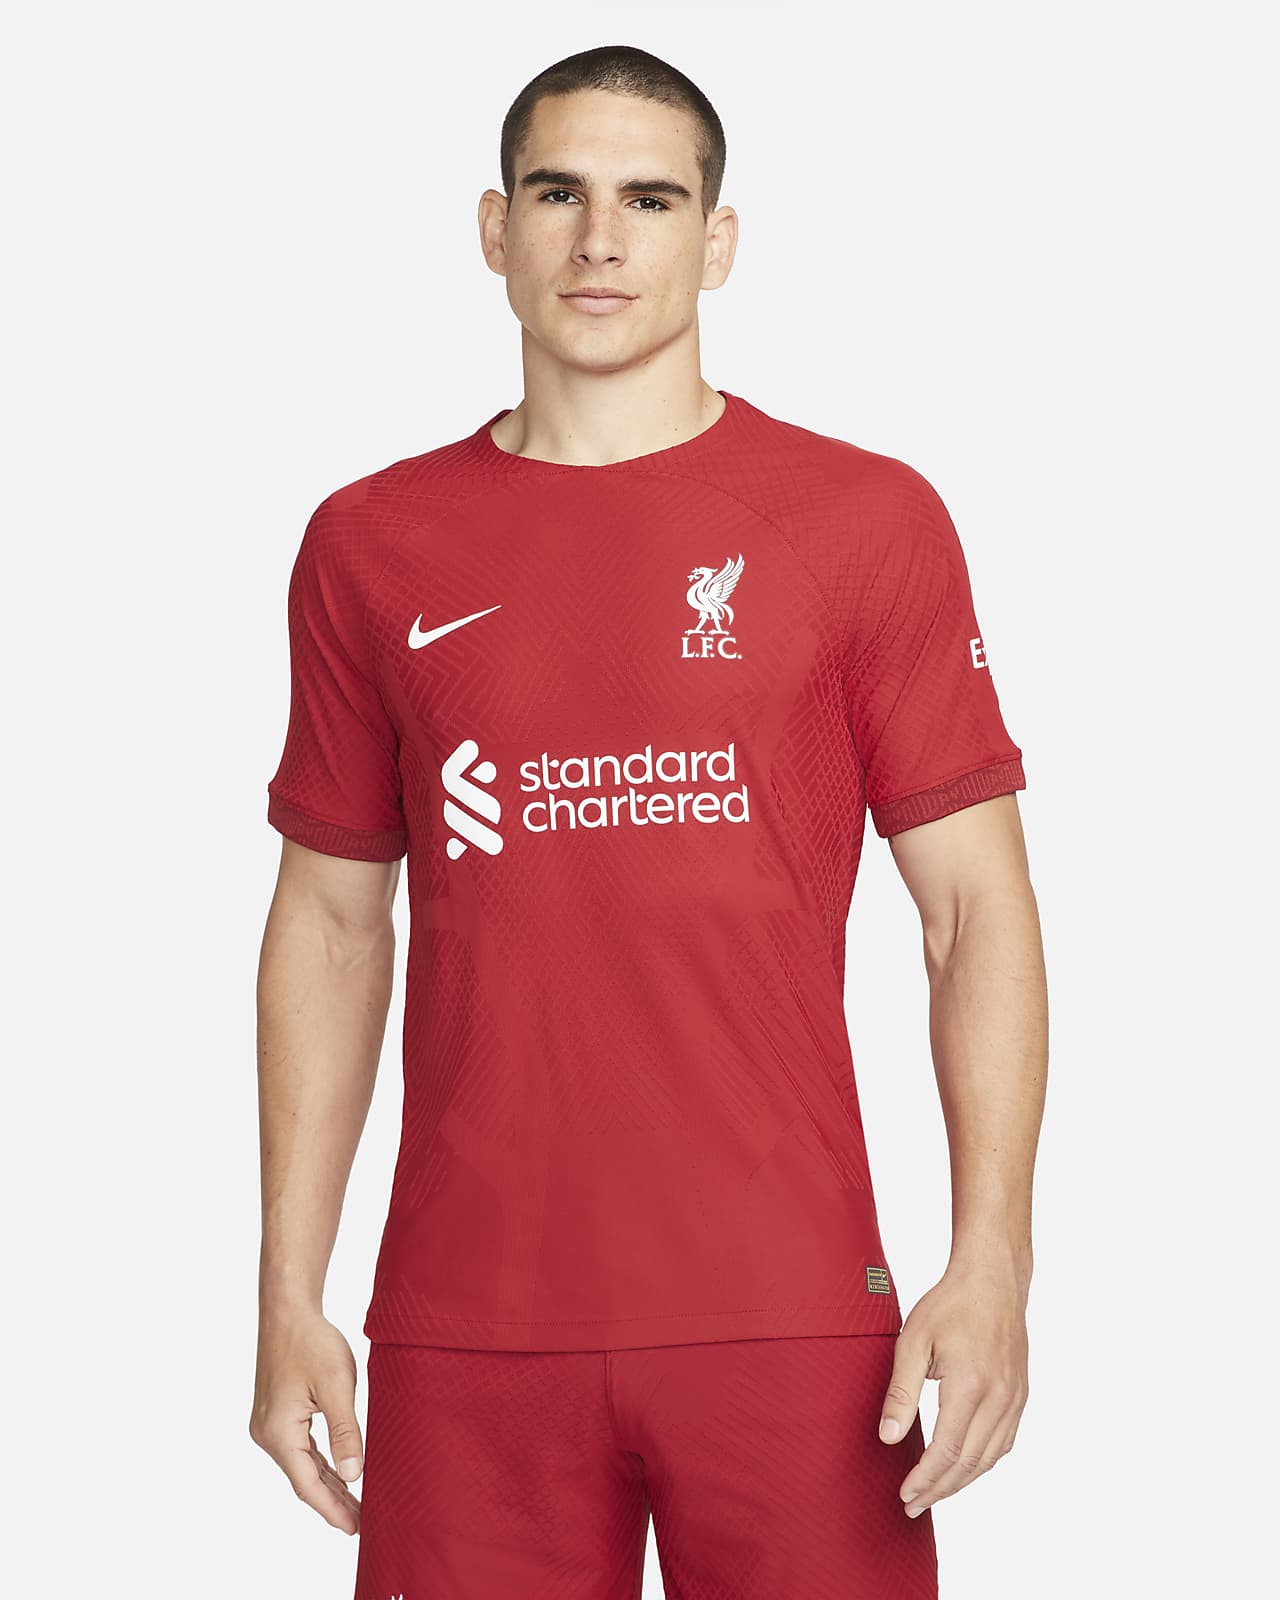 Liverpool F.C. 2022/23 Match Home Men's Nike Dri-FIT ADV Football Shirt